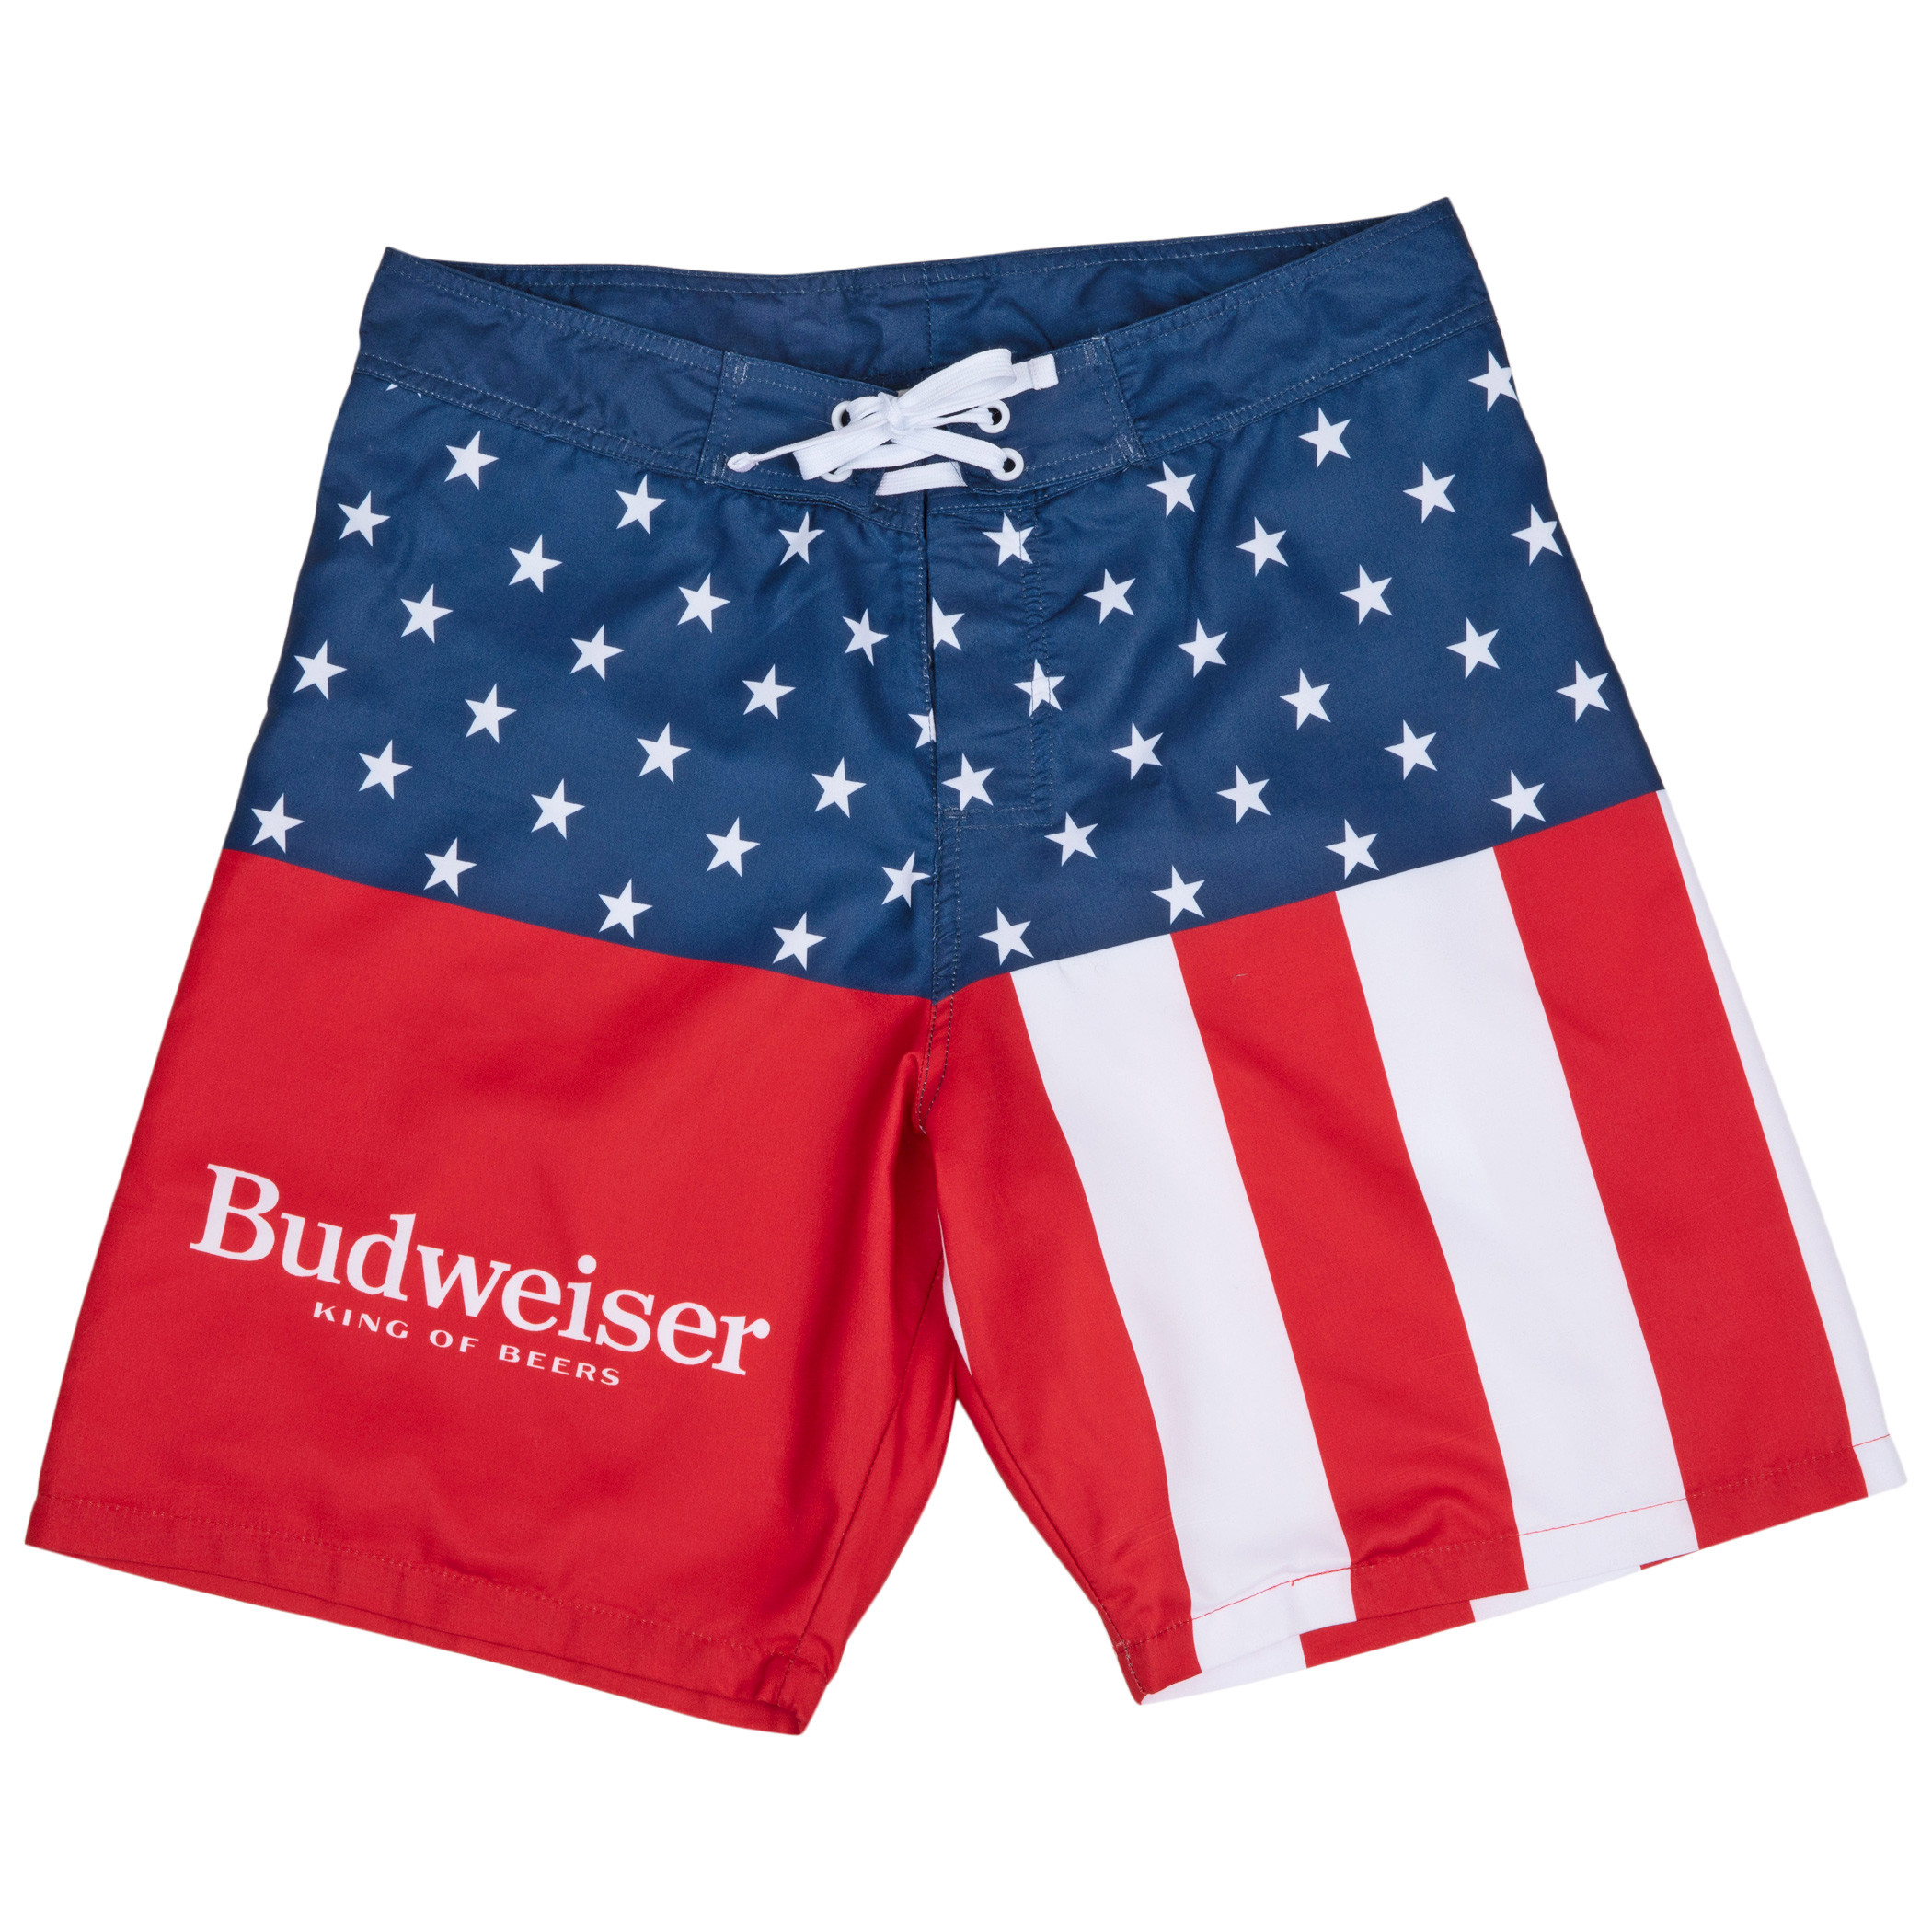 Men's Budweiser Beer Board Shorts Swim Trunk Swimwear Red Vintage American Bud